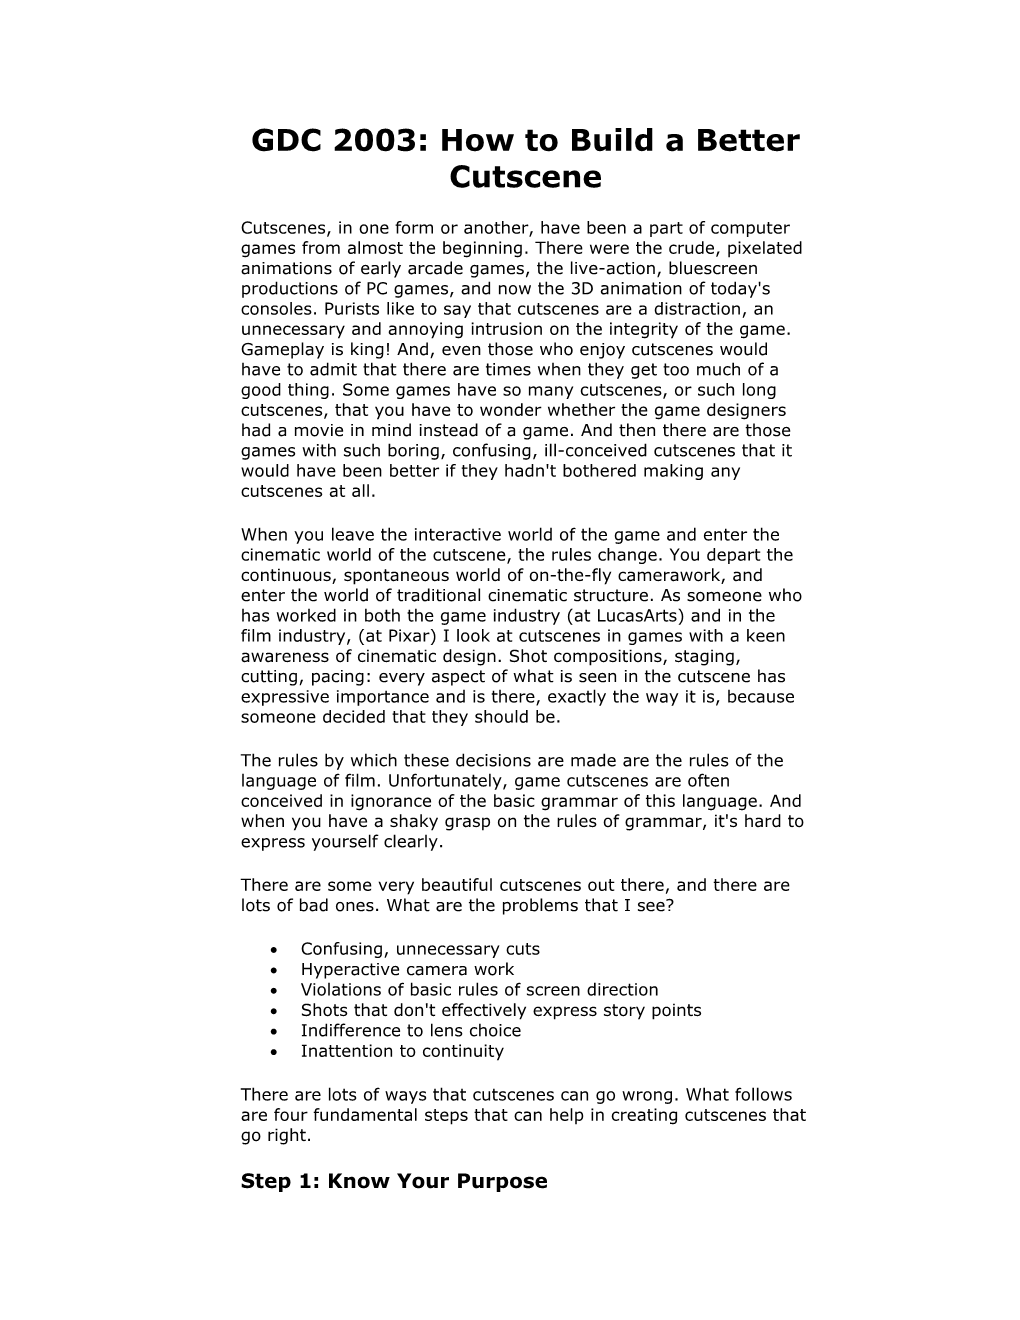 GDC 2003: How to Build a Better Cutscene